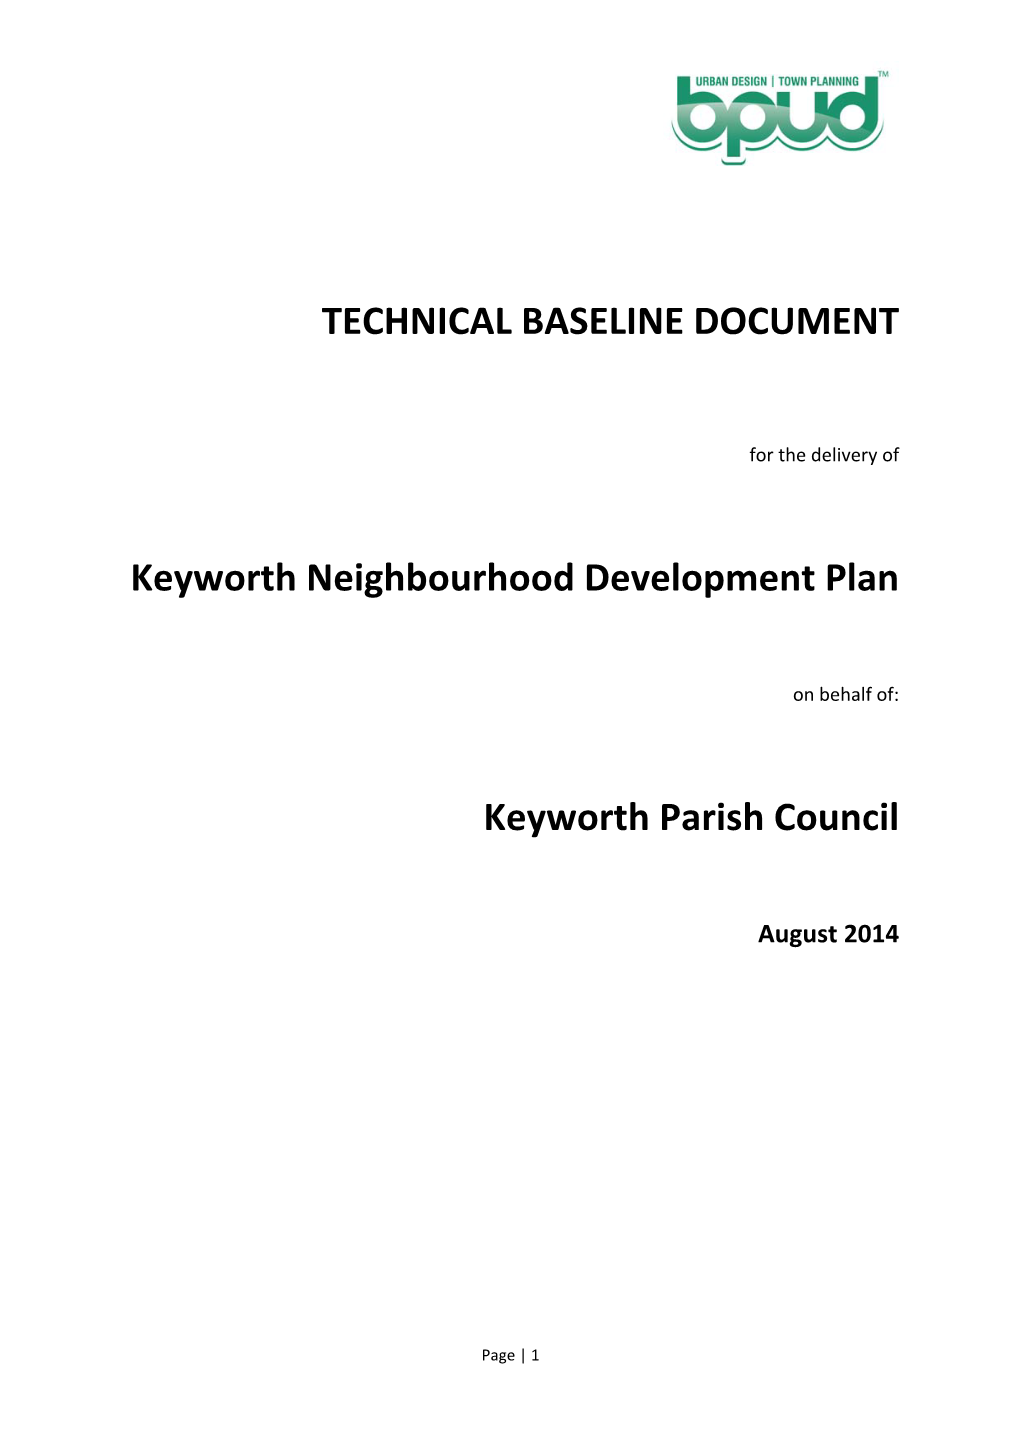 Technical Baseline Document